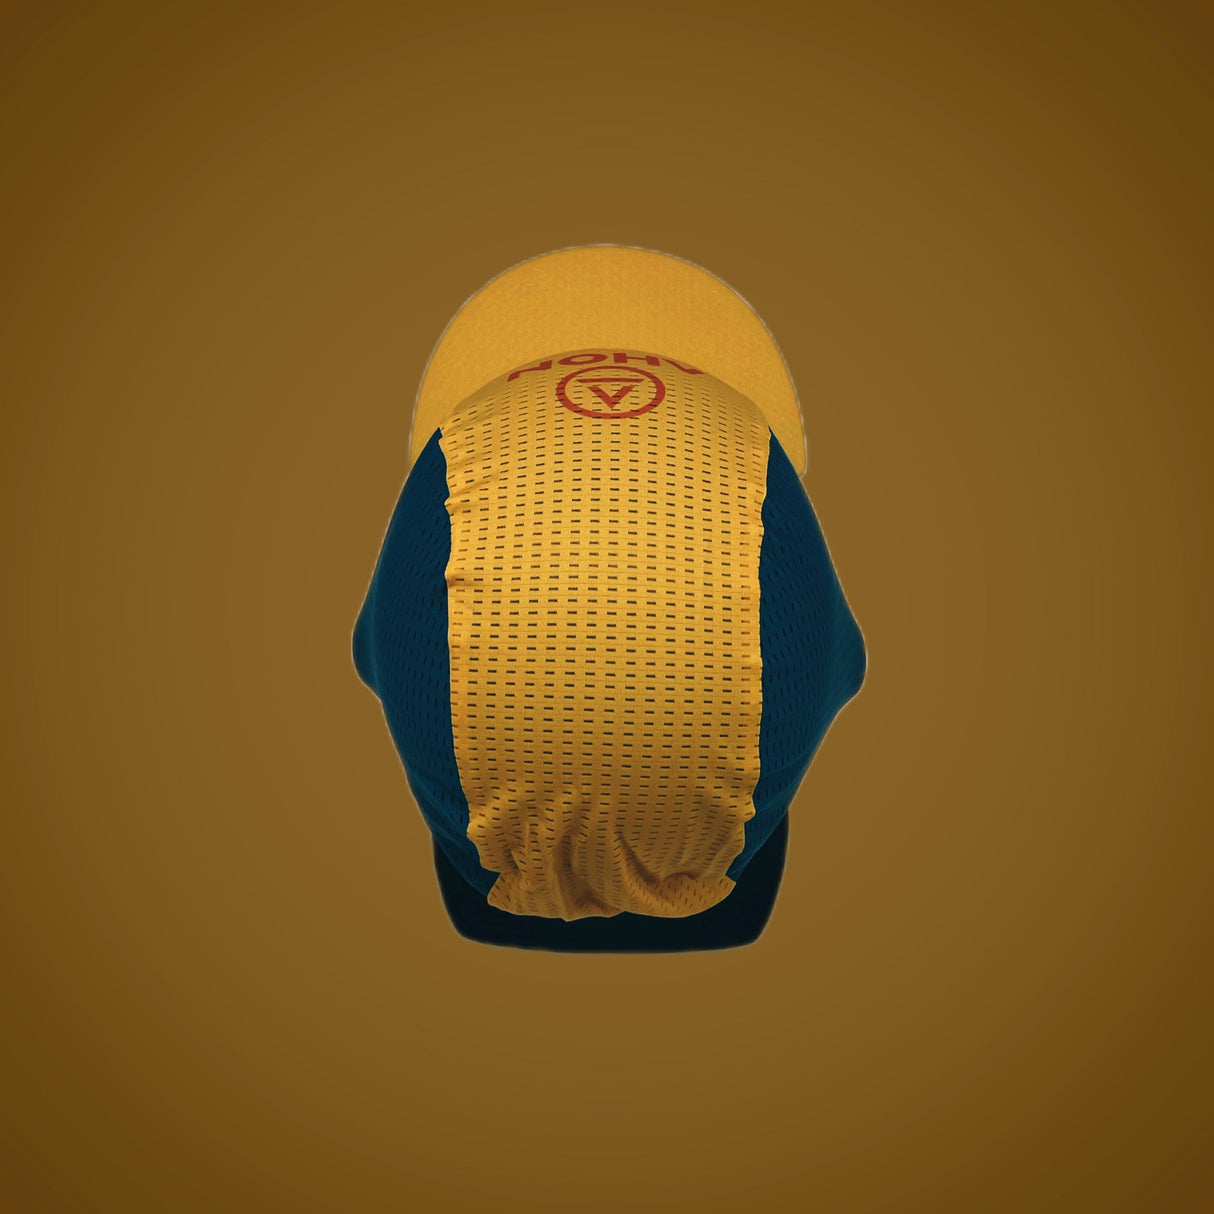 Adventure Cycling Cap (seafoam / sunflower / ginger) - Ahon.ph